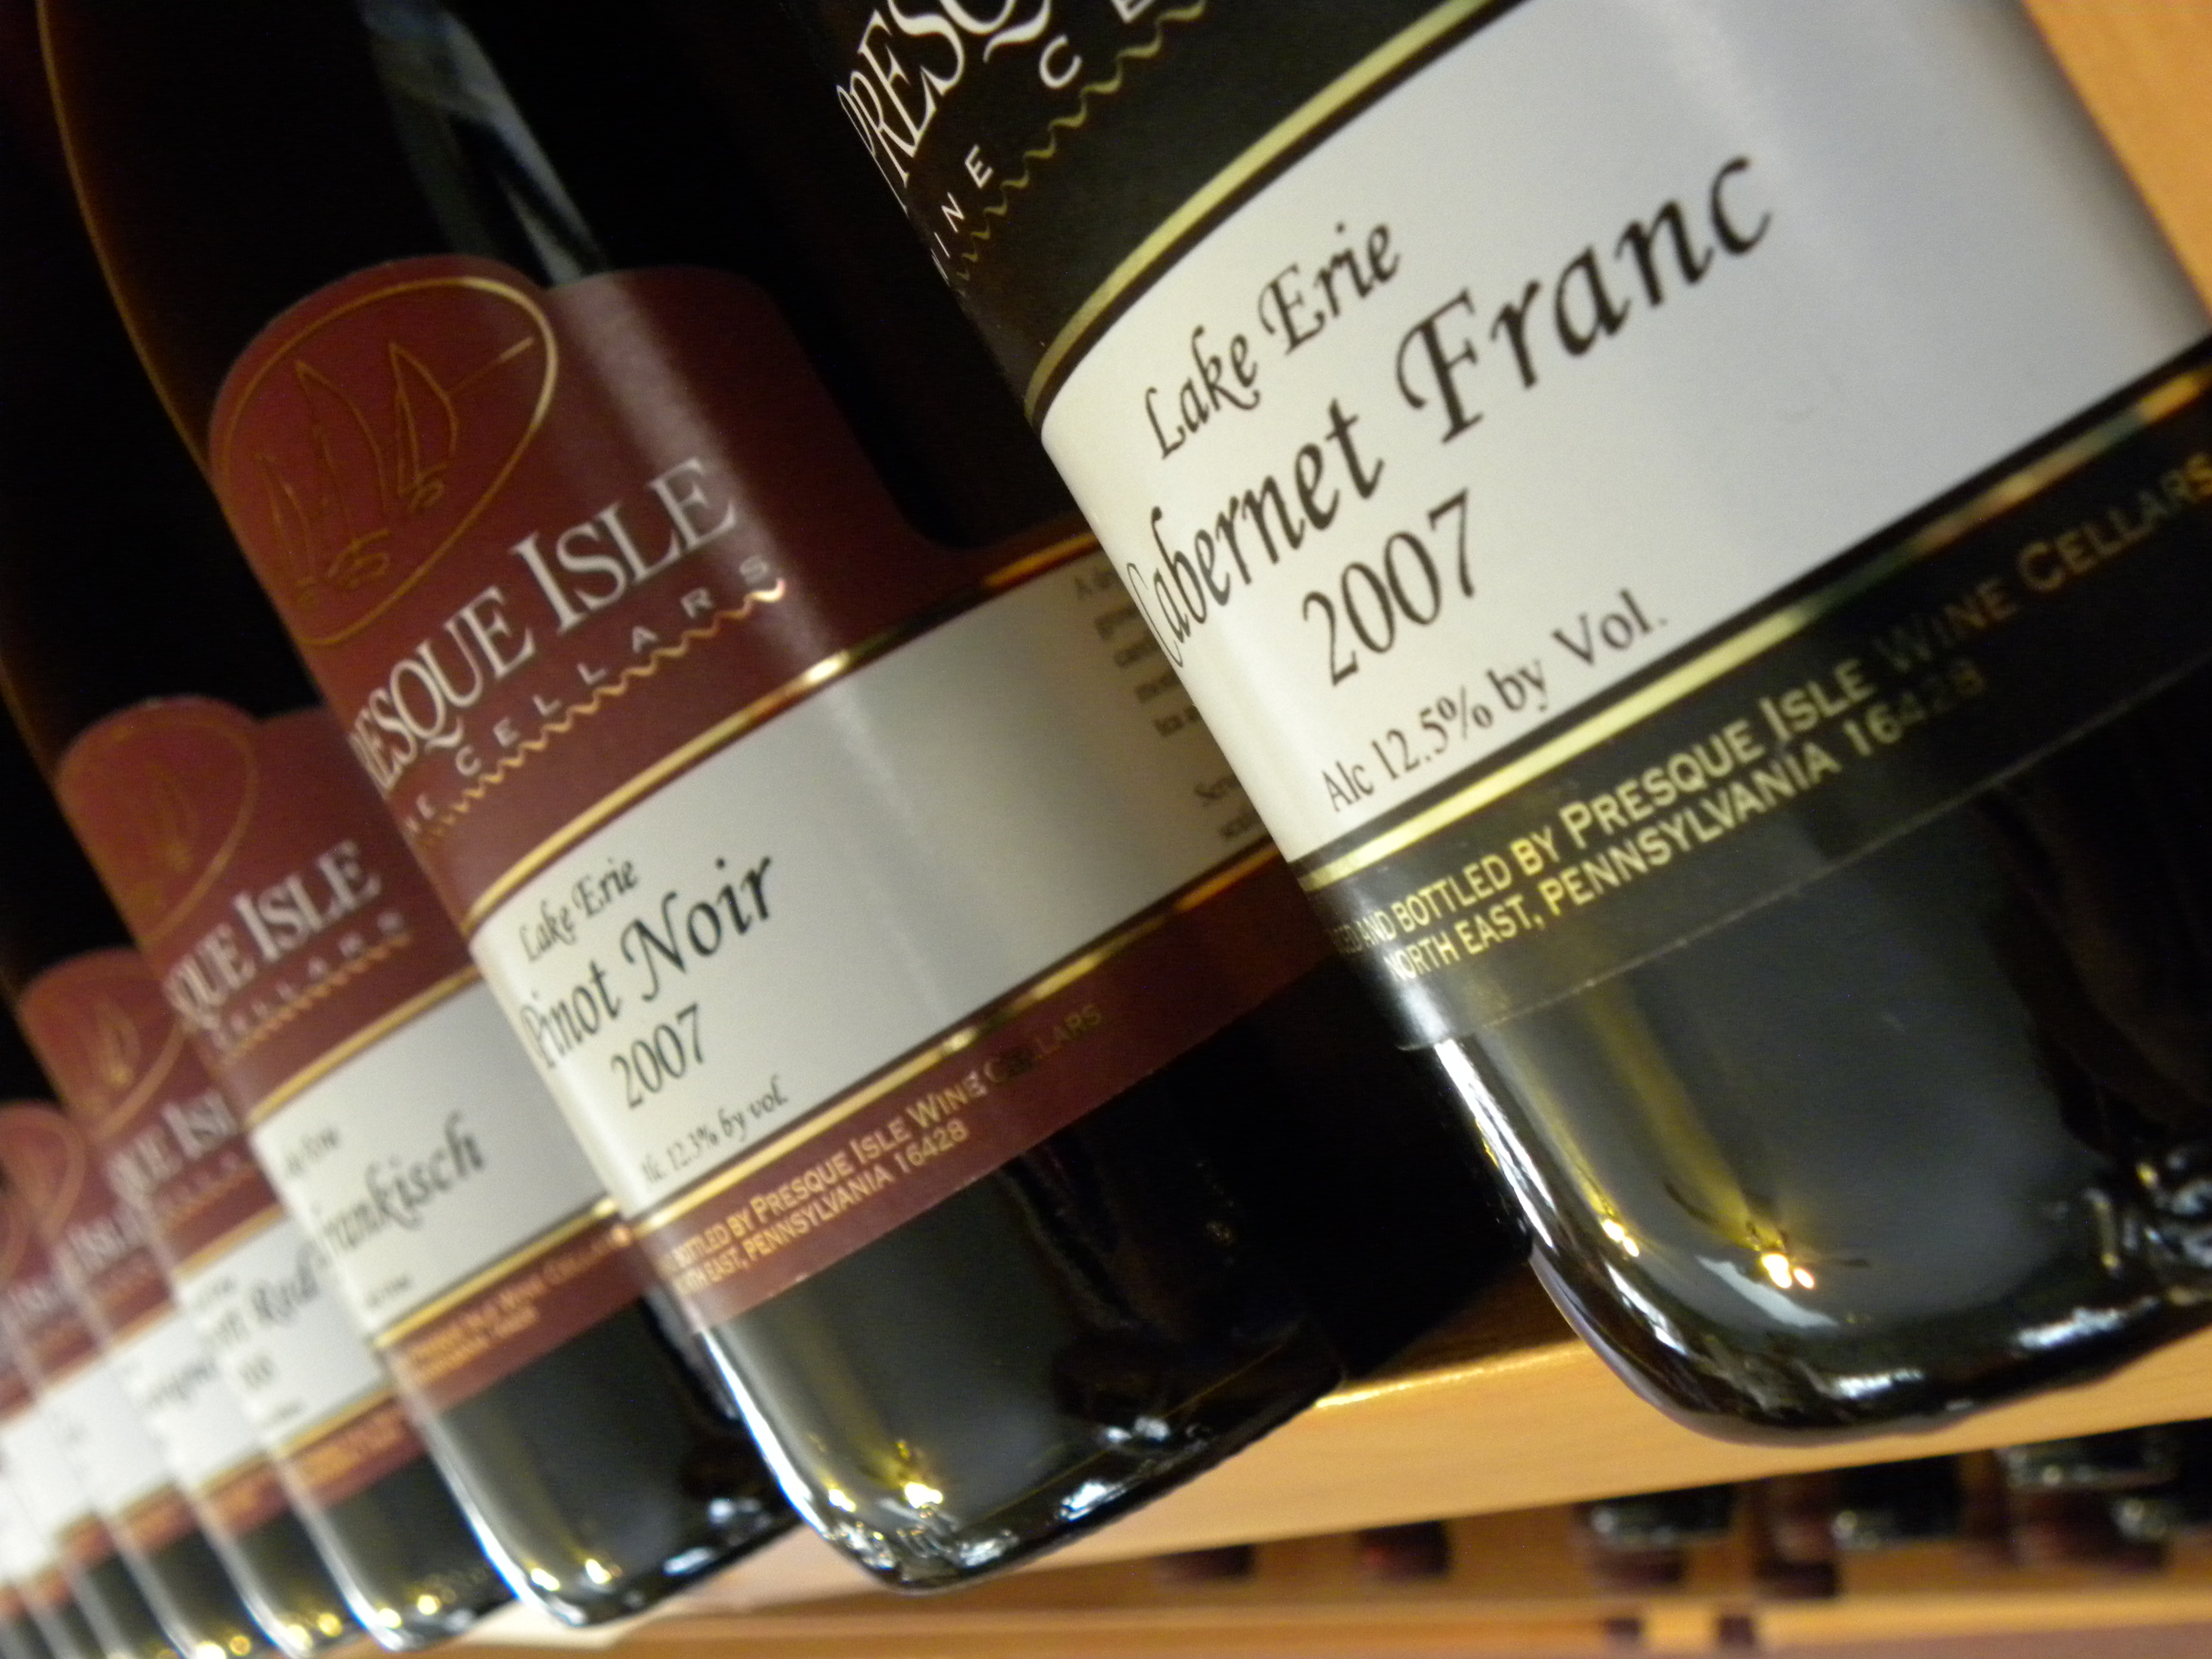 Award winning Lake Erie wines from Presque Isle Wine Cellars